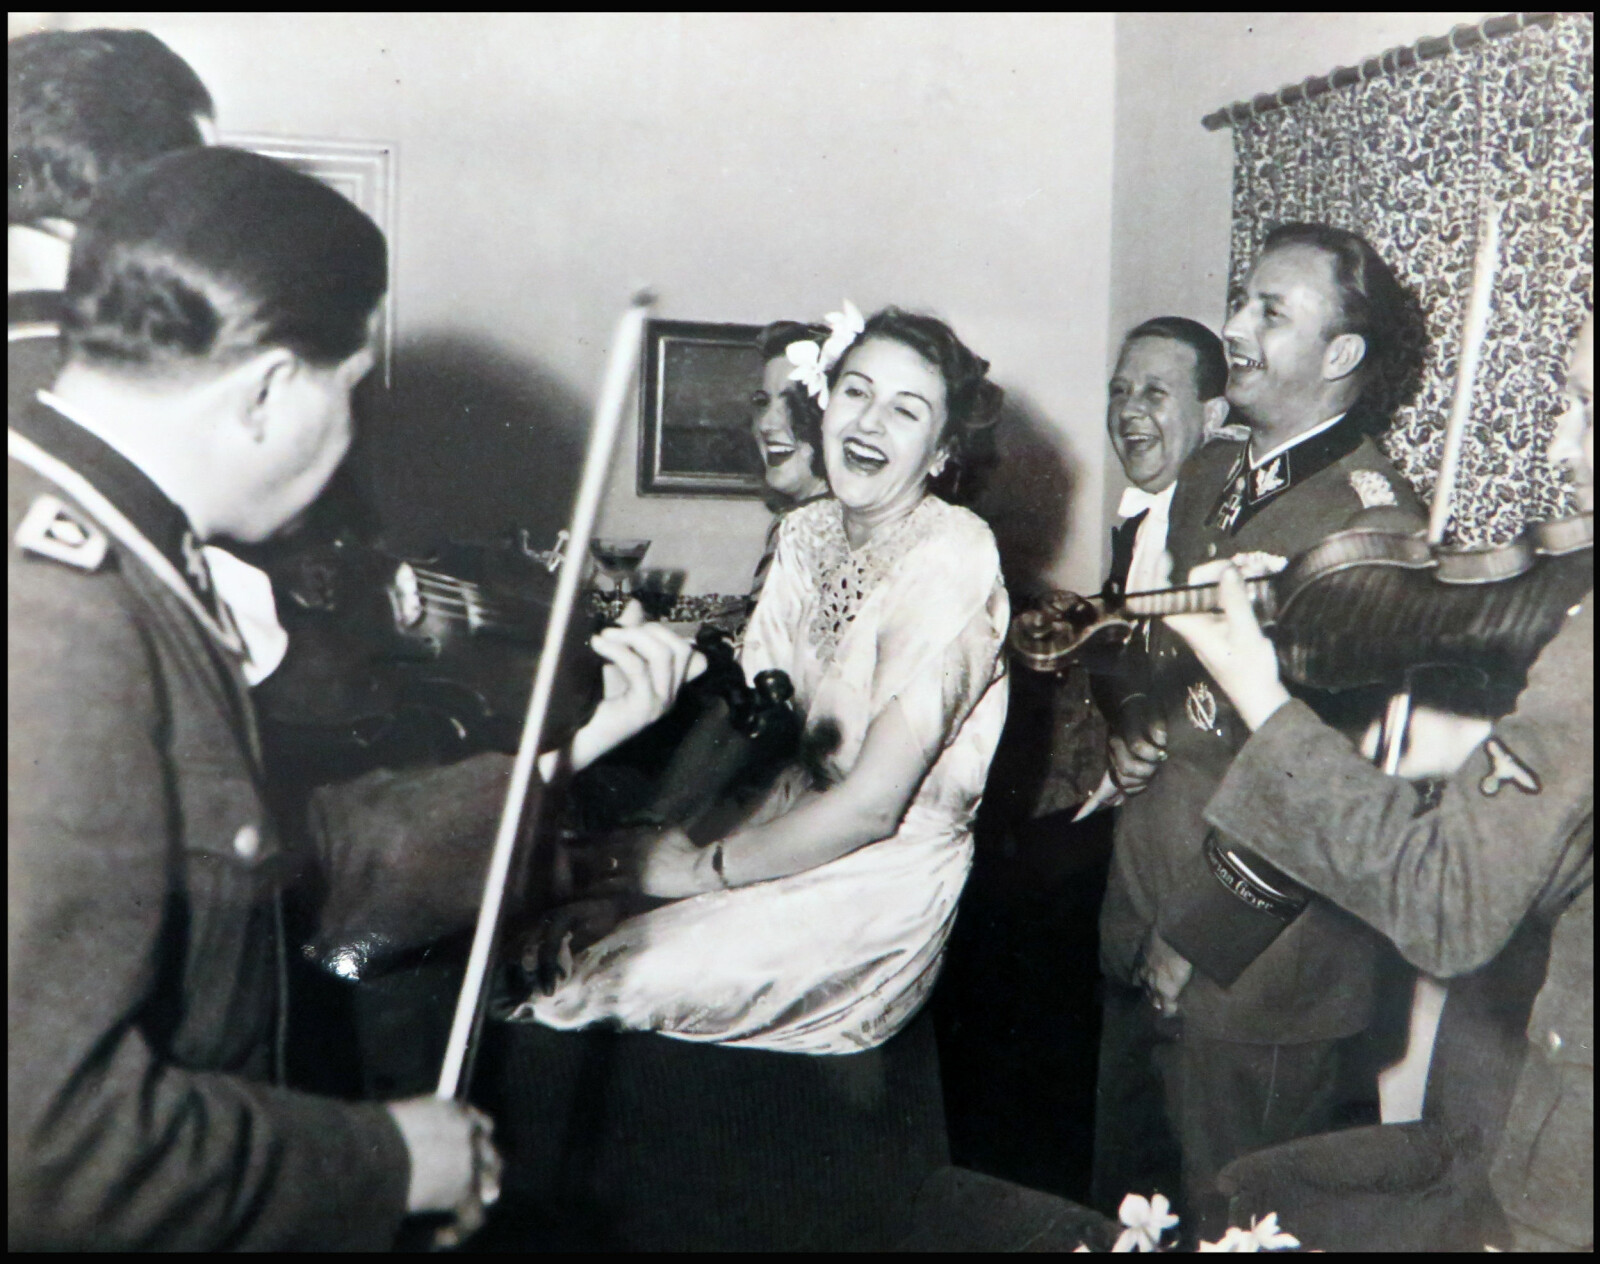 SERENADE: Gretl Braun omkranset av nazimusikere under brylupsfesten.